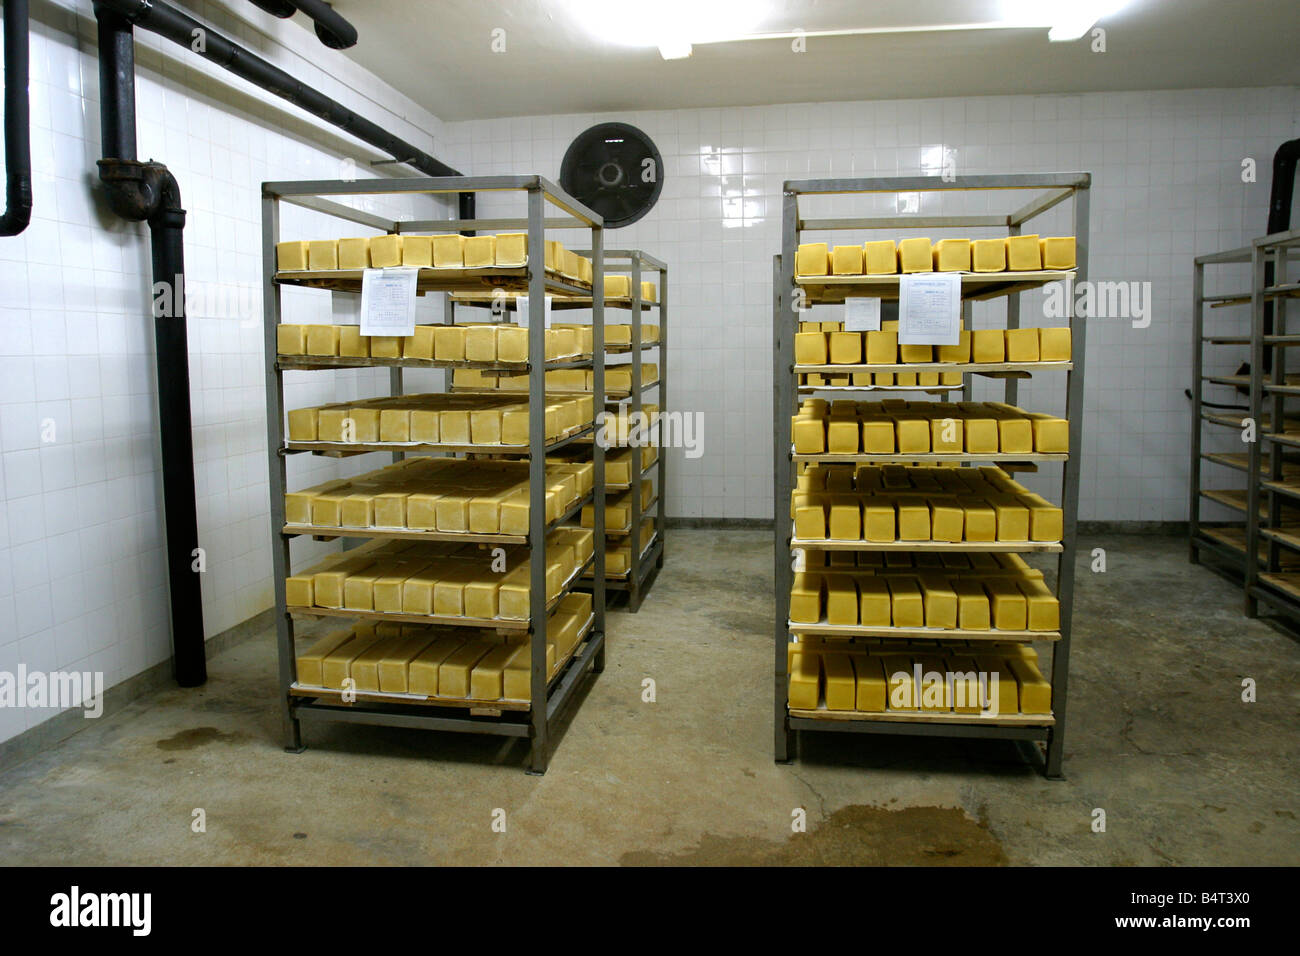 https://c8.alamy.com/comp/B4T3X0/cheese-in-cold-storage-in-modern-dairy-B4T3X0.jpg